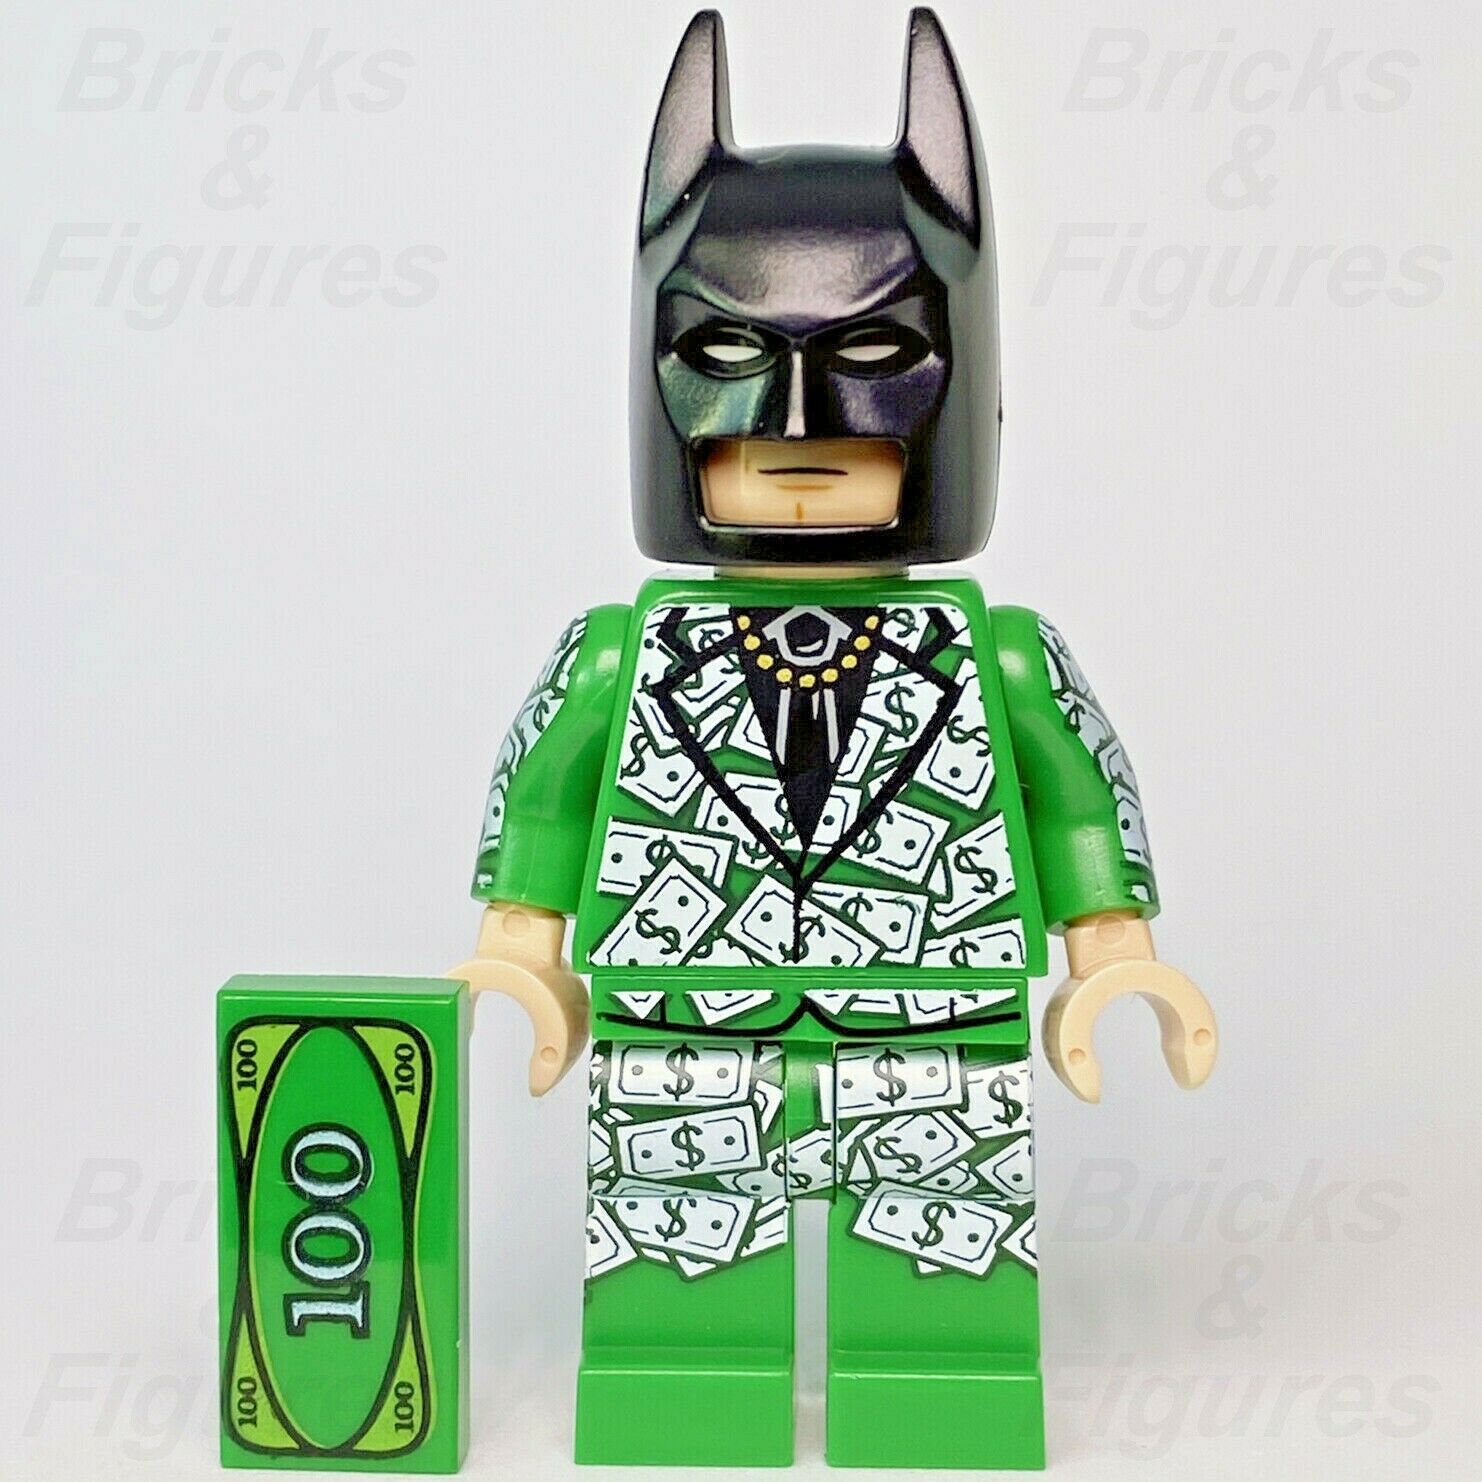 Dollar Bill Tuxedo Batman The LEGO Movie DC Super Heroes Minifigure 5004939 - Bricks & Figures